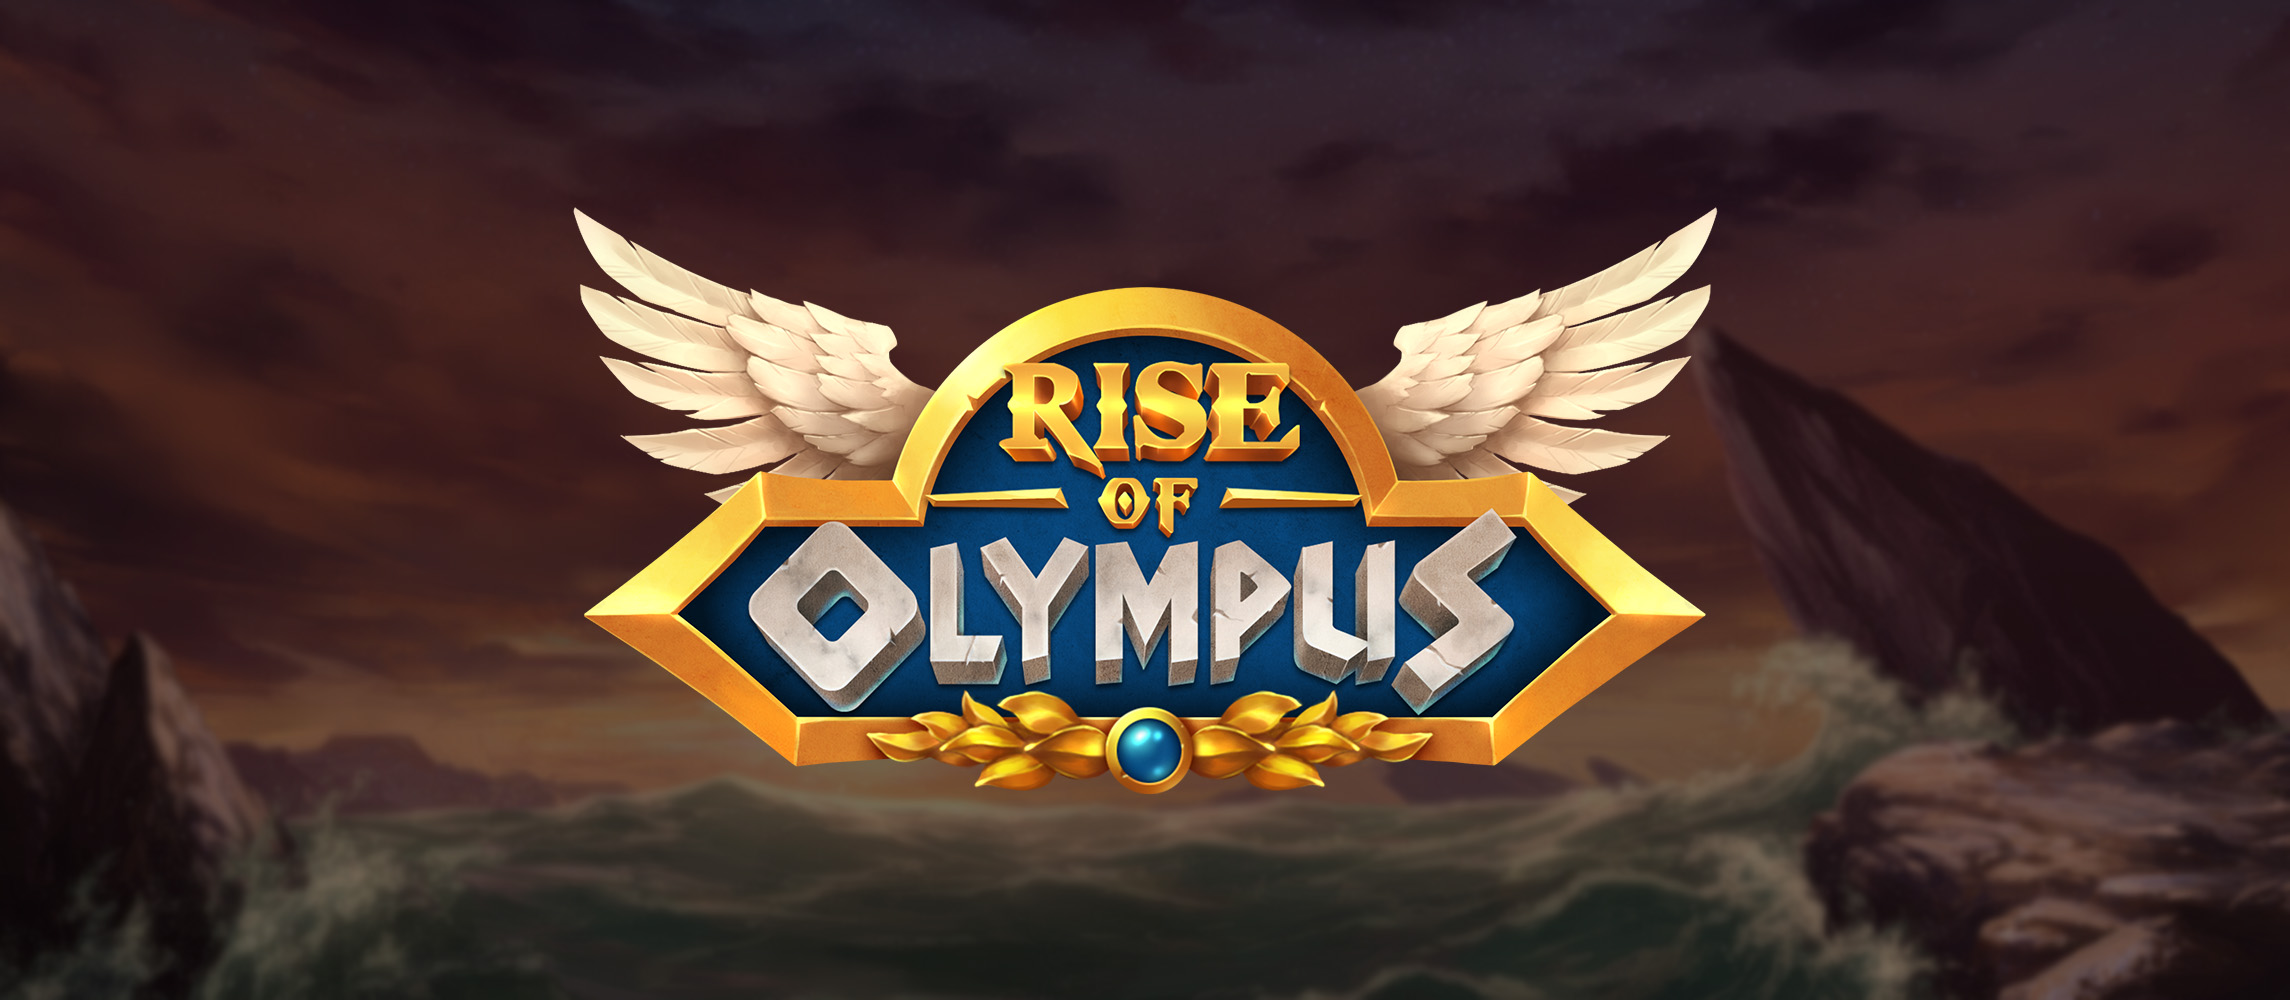 Rise of Olympus by Play’n GO